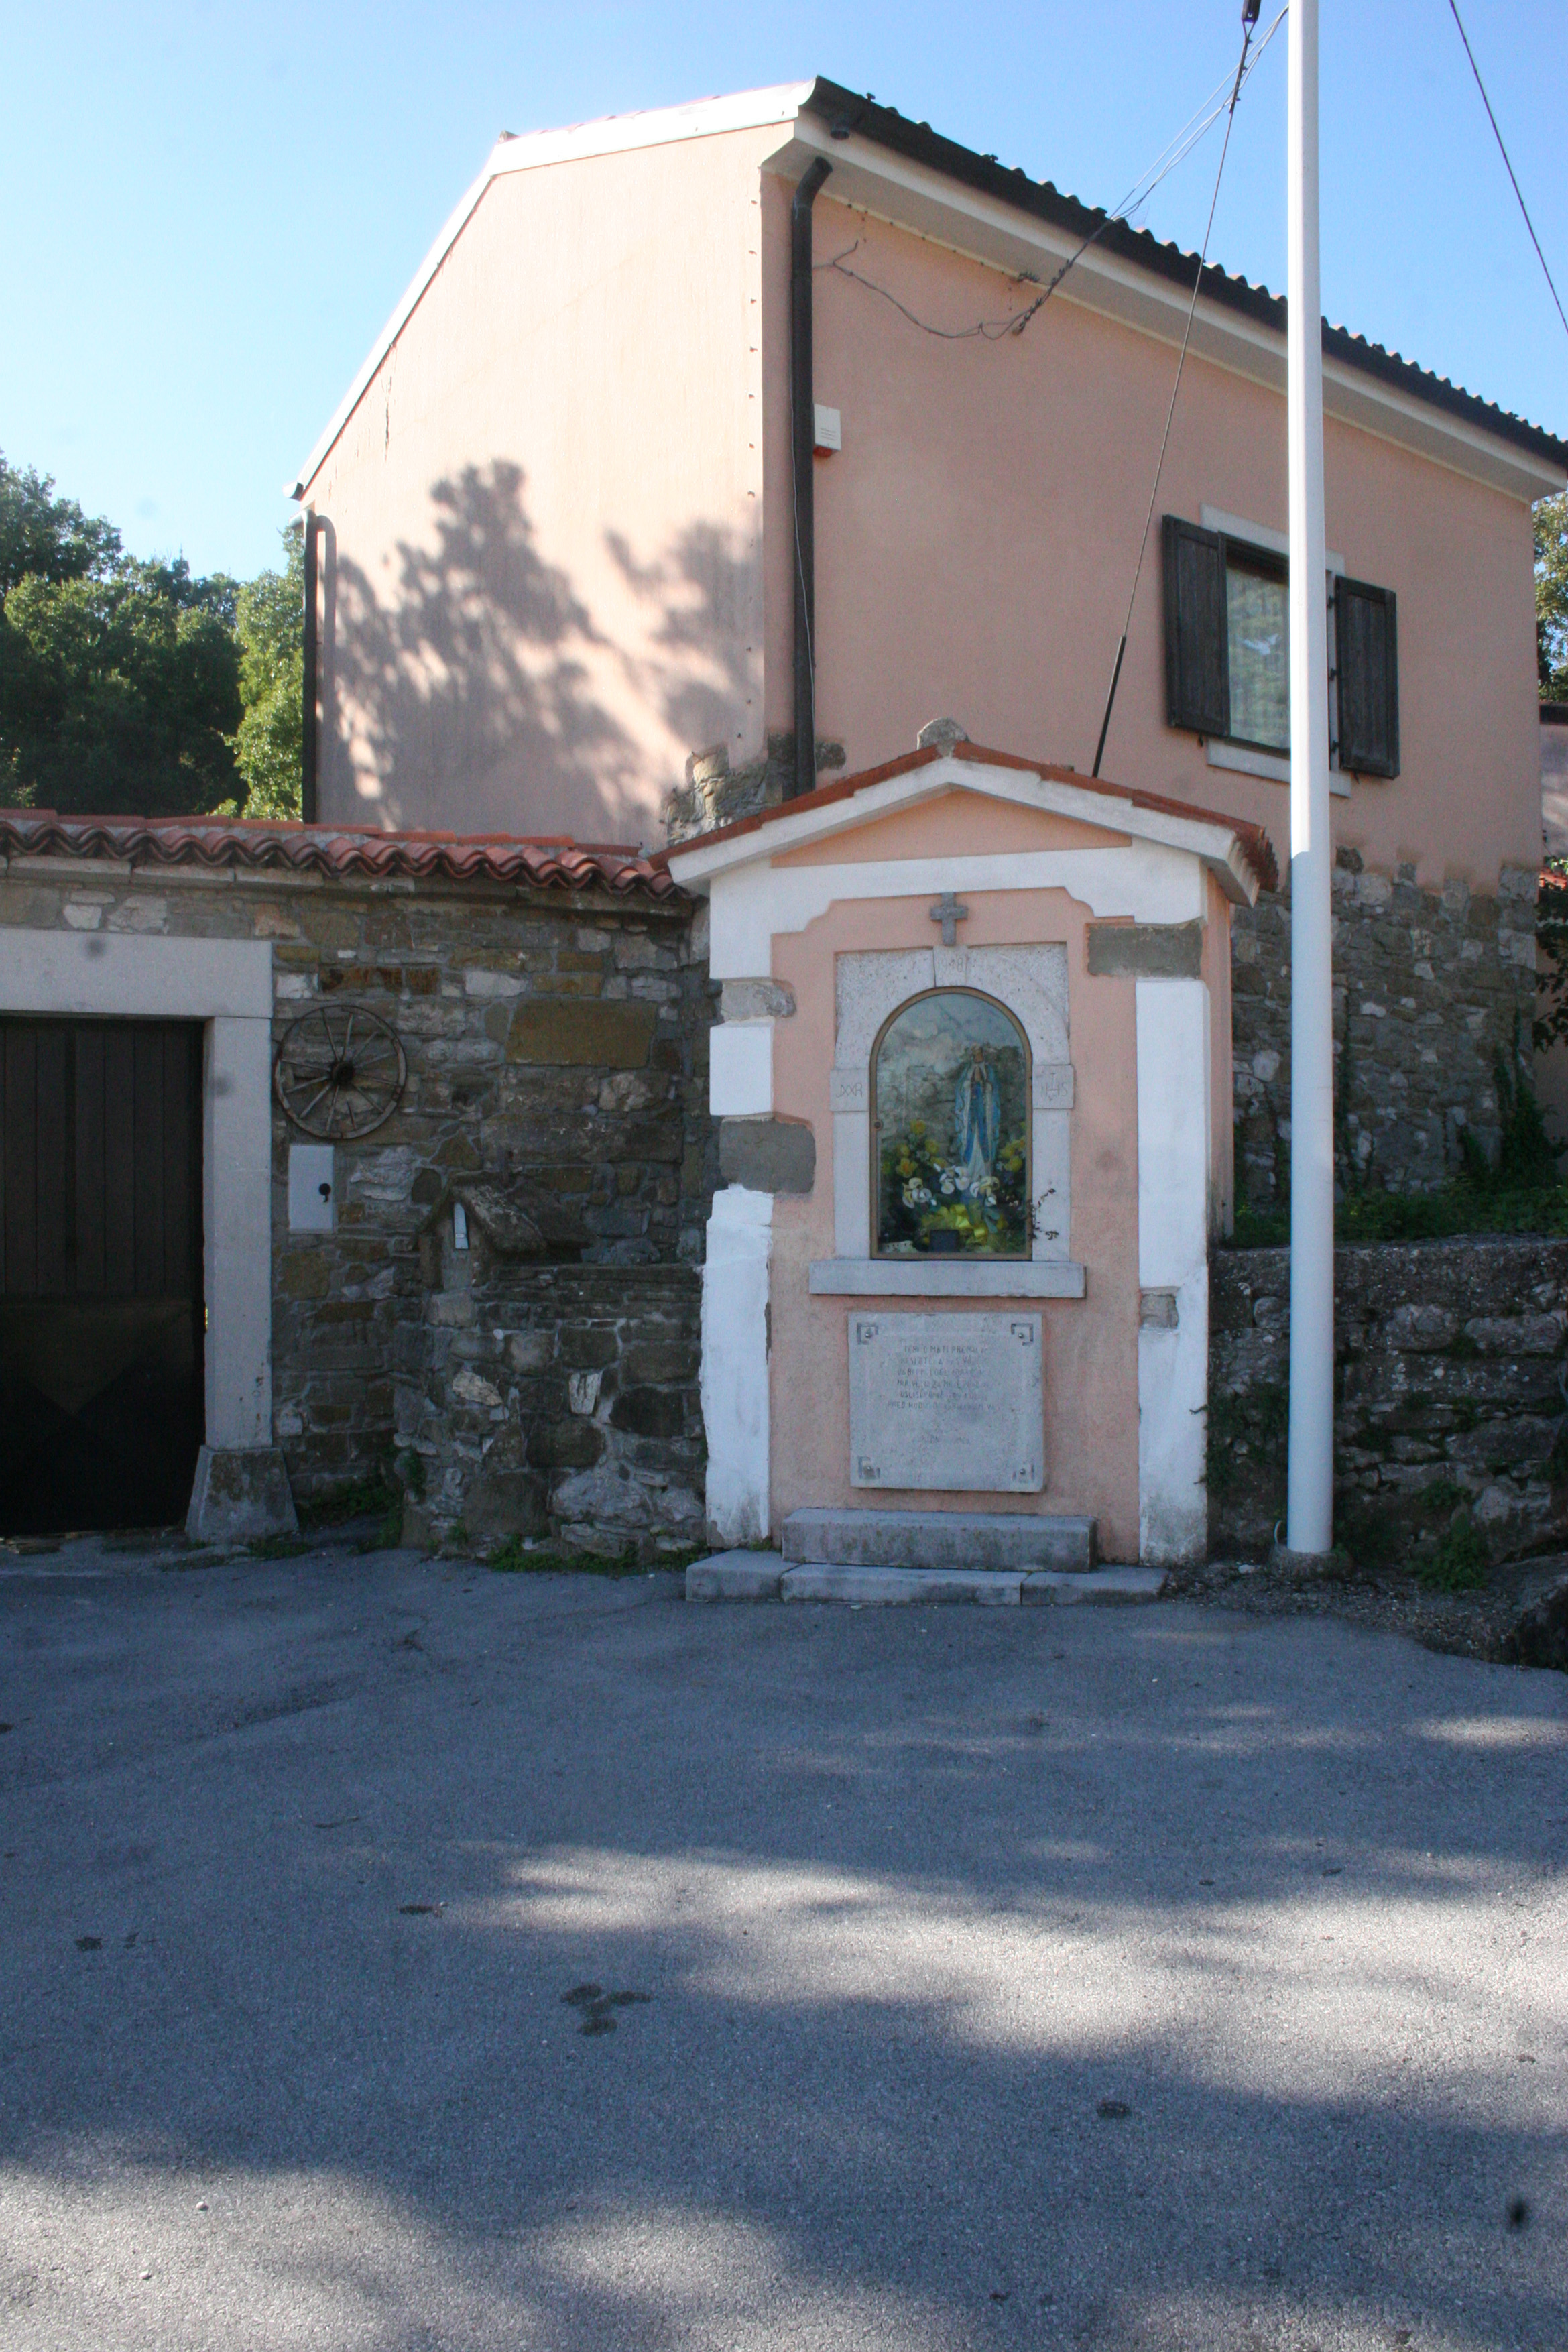 casa rurale su cortile (casa) - San Dorligo della Valle (TS) 